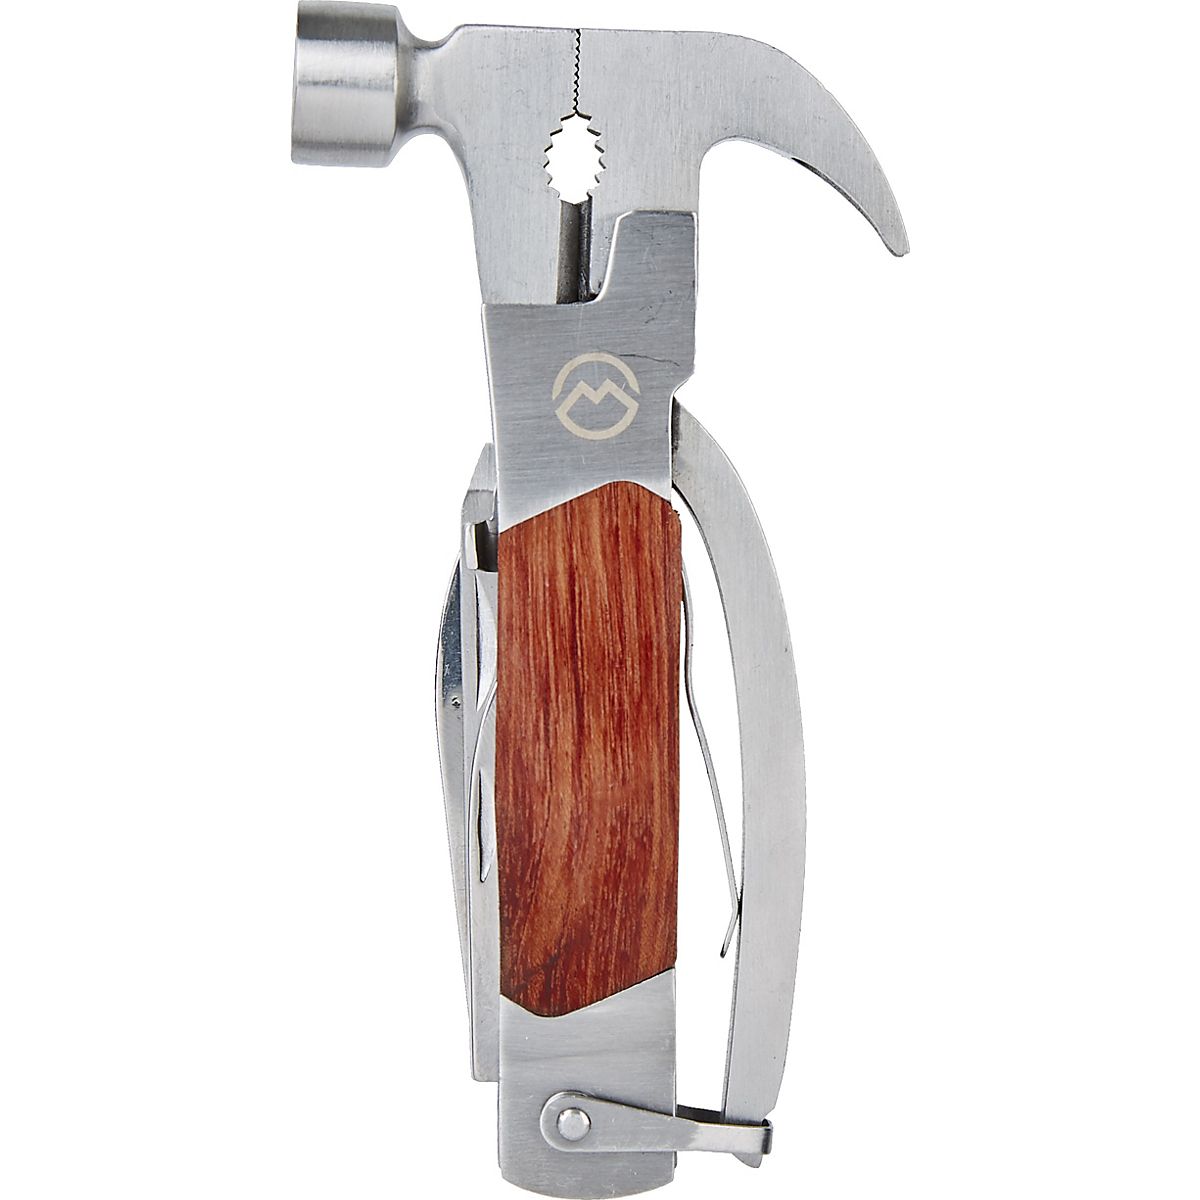 ROXON Hammer Multi Tool  Free Shipping over $49!